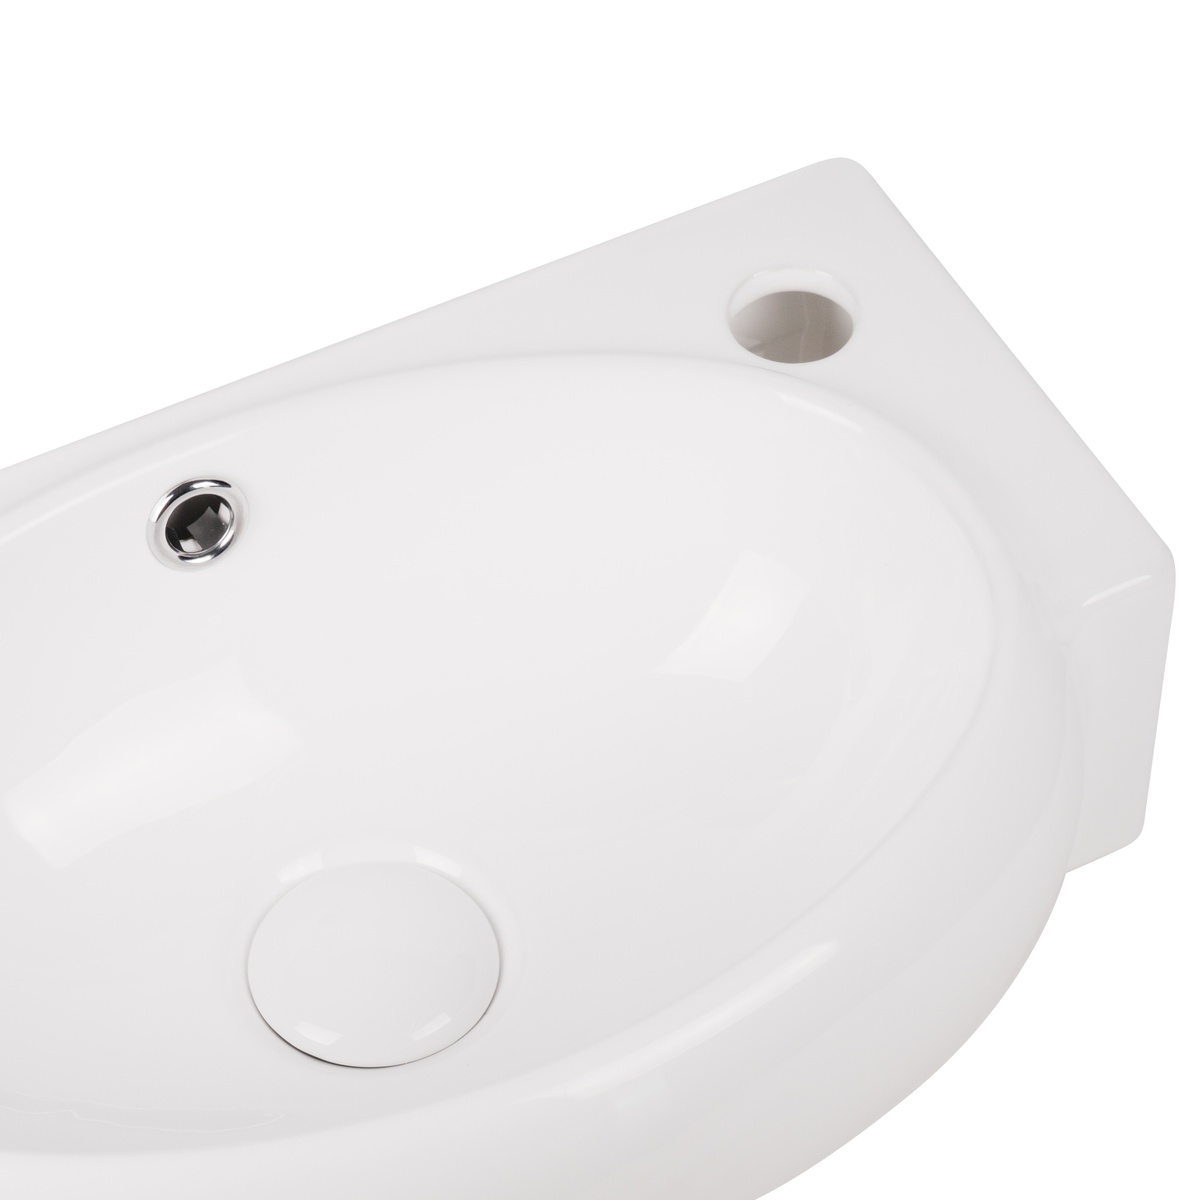 Раковина подвесная для ванной 430мм x 280мм Q-TAP Leo белый овальная QT11115011RW